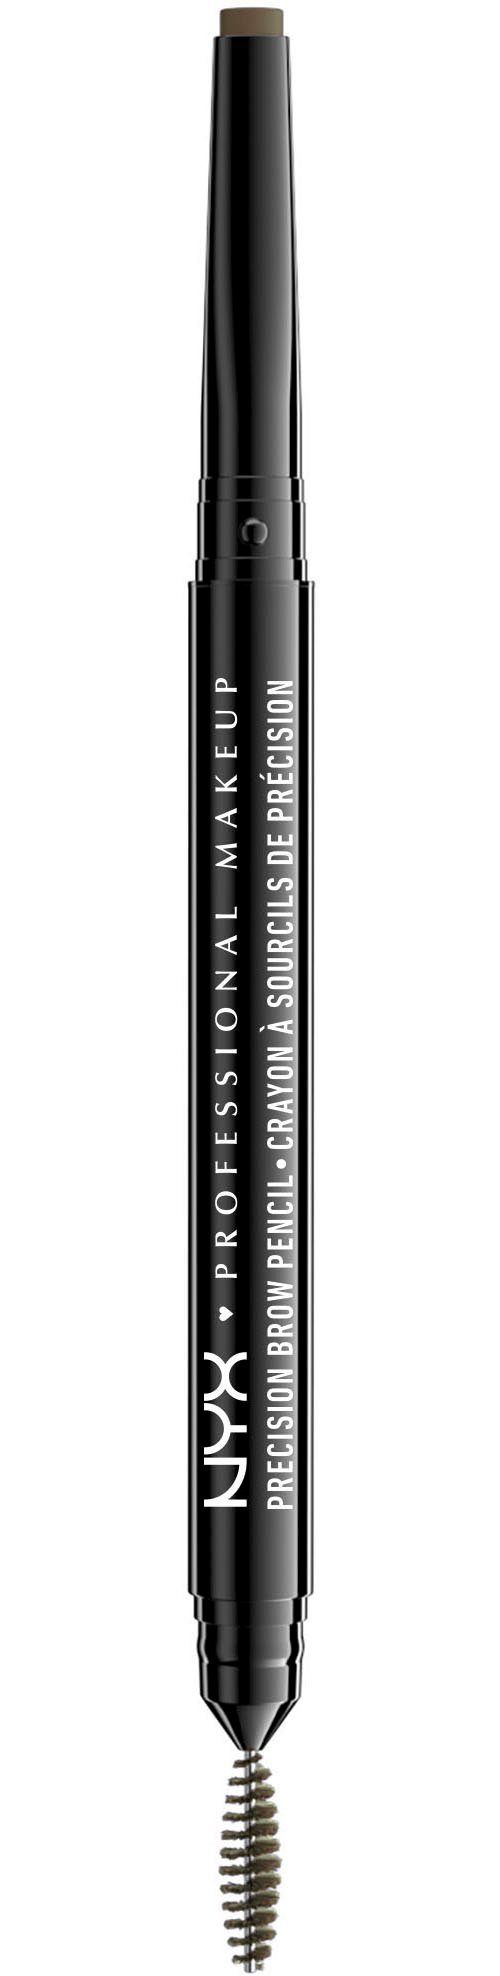 Professional Makeup Pencil taupe Augenbrauen-Stift NYX Precision Brow